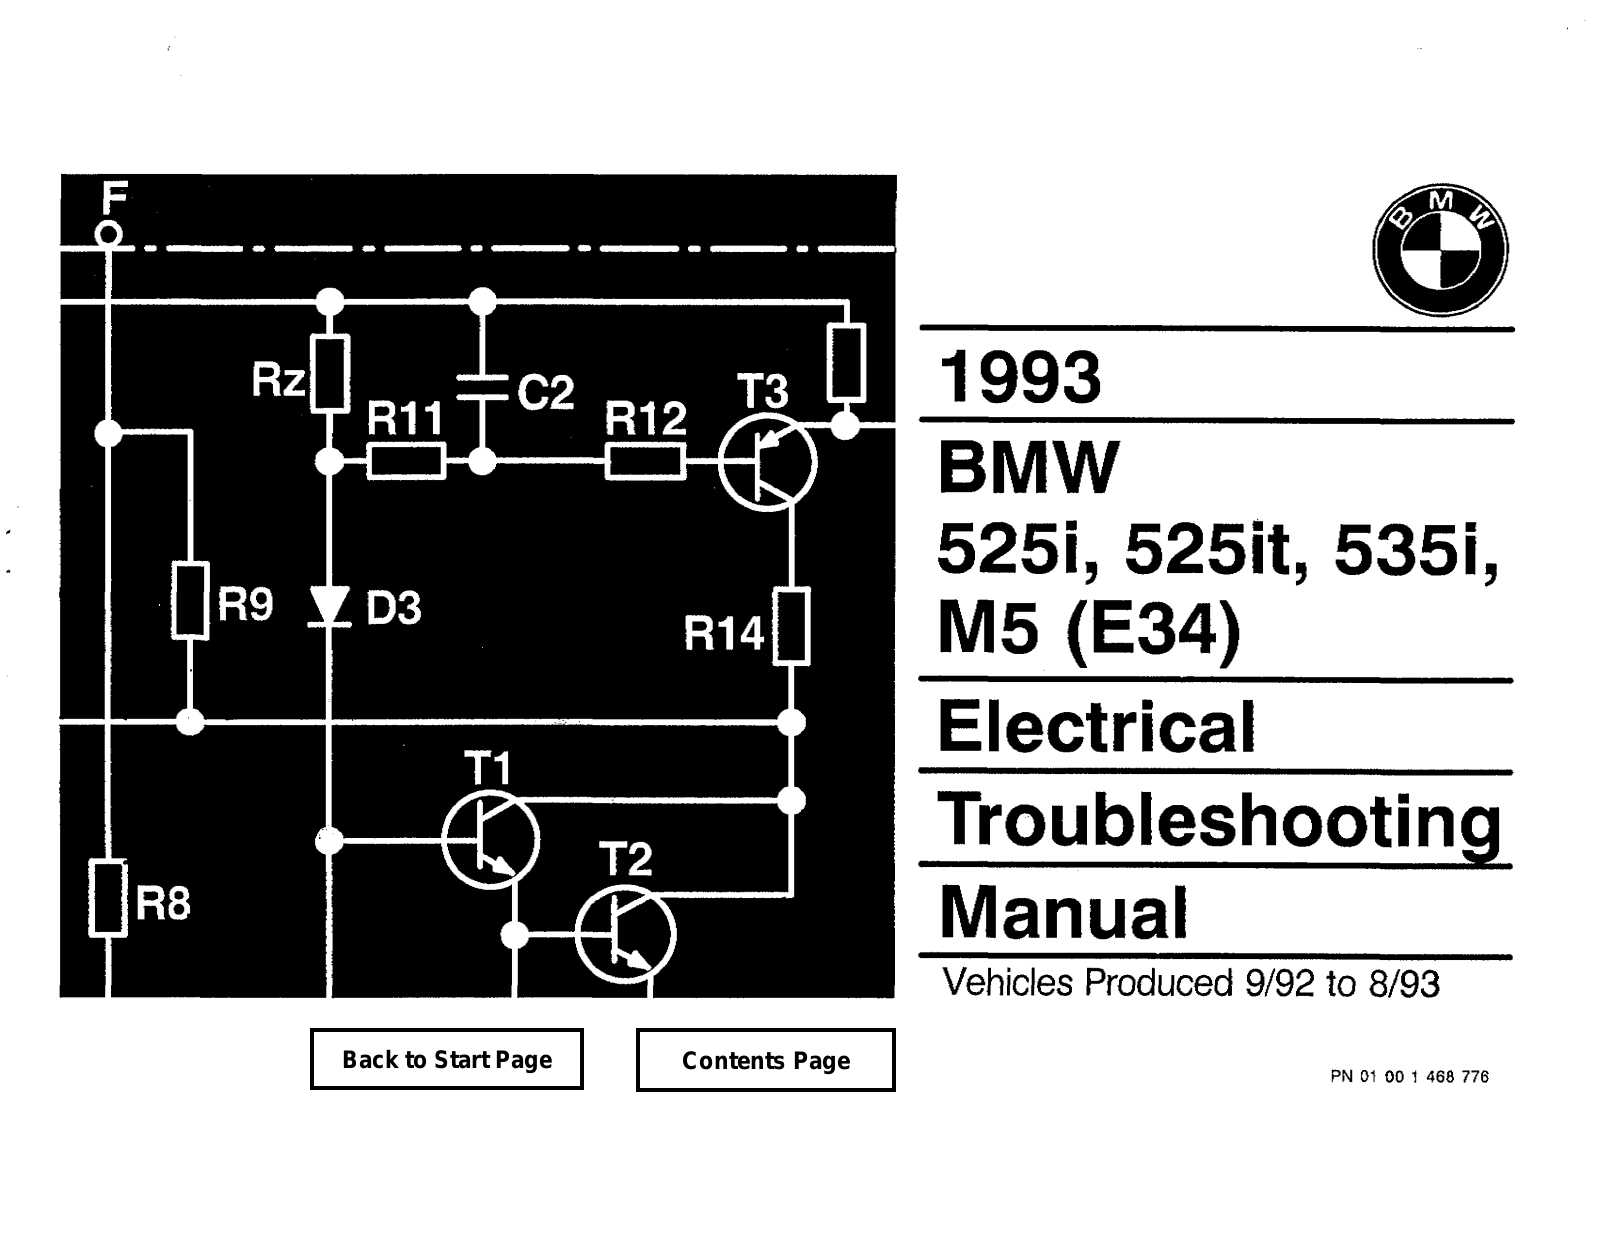 BMW 535, 525 1993, M5 1993, 525it, 535i User Manual